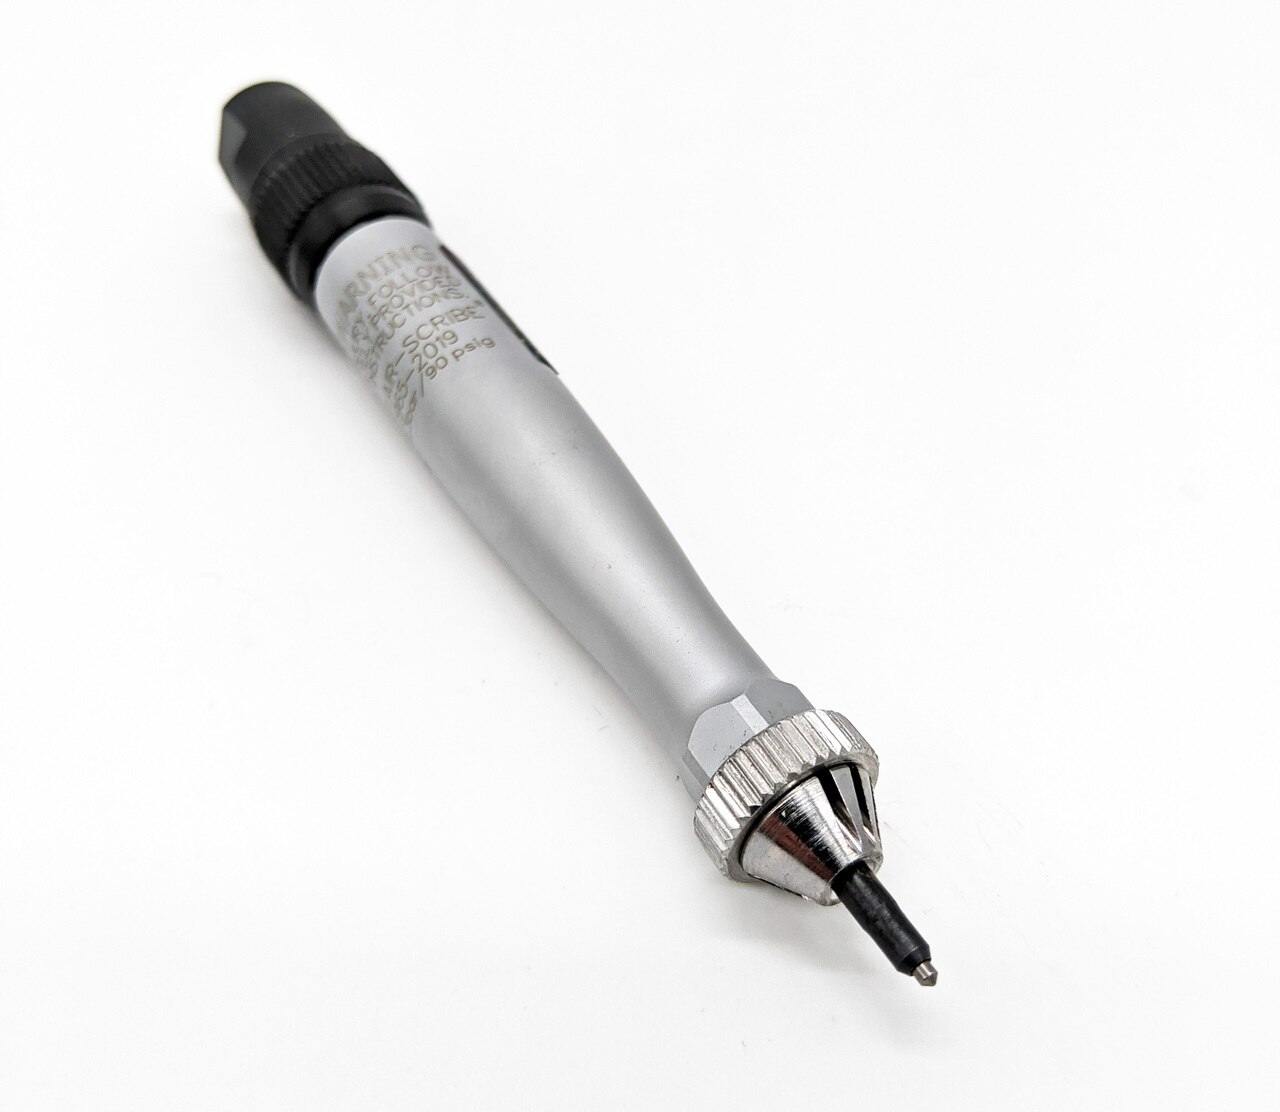 Air Engraving Pen, Air Scriber (34000bpm, Plastic Housing) - Air Scriber,  Air Scribe, Air Engraver, Air Scribe Engraving Pen, Pneumatic Engraving-Scribe  Pens, Air Engraving Tools, Pneumatic Pen Marker